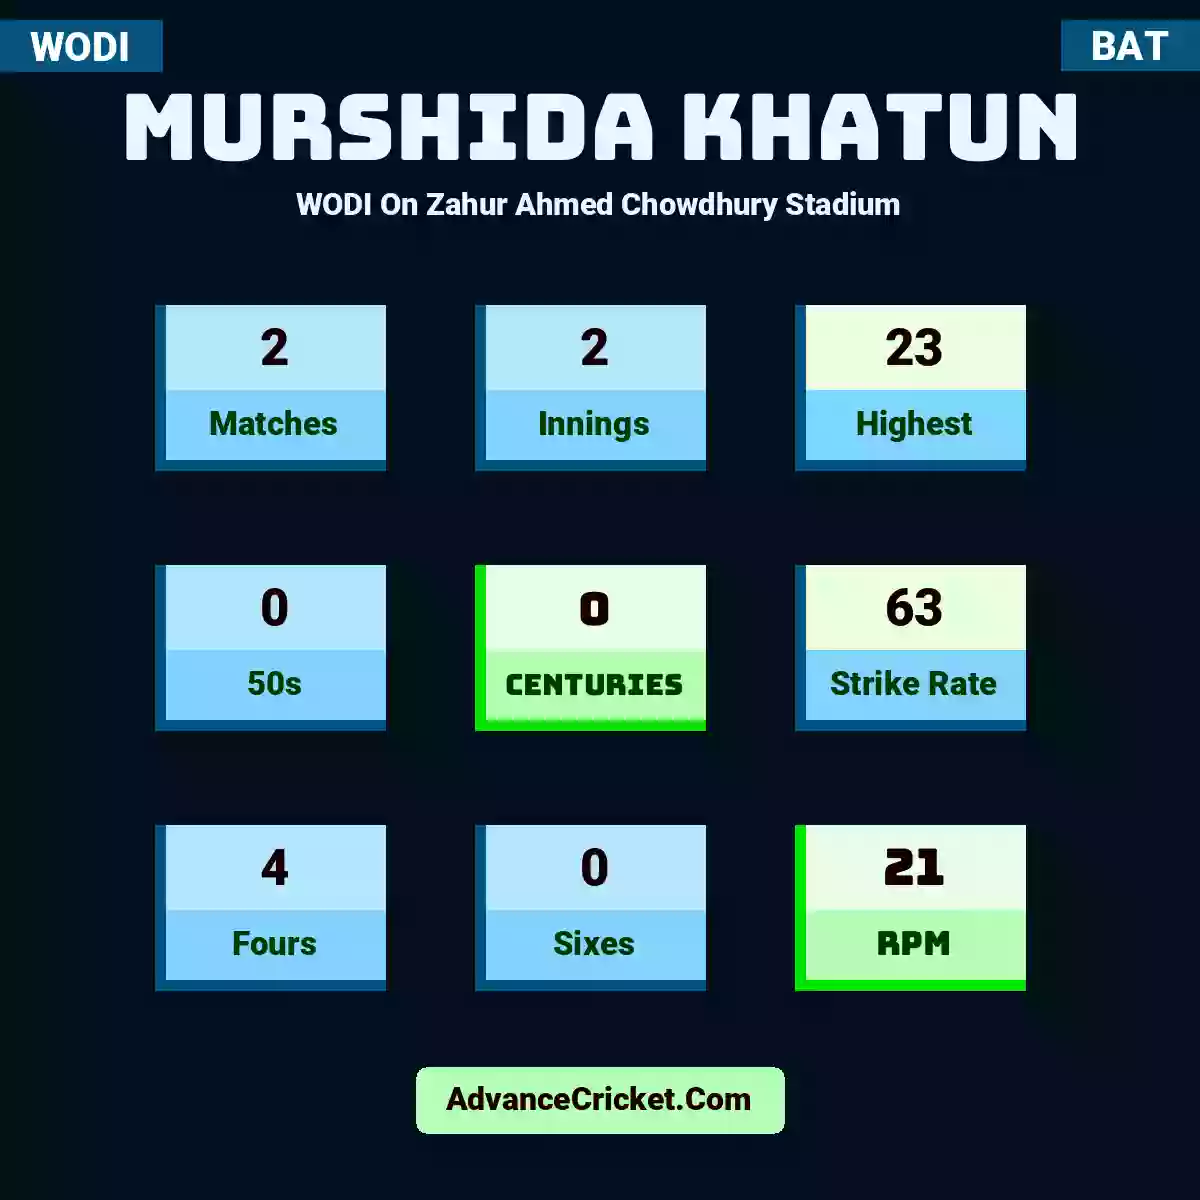 Murshida Khatun WODI  On Zahur Ahmed Chowdhury Stadium, Murshida Khatun played 2 matches, scored 23 runs as highest, 0 half-centuries, and 0 centuries, with a strike rate of 63. M.Khatun hit 4 fours and 0 sixes, with an RPM of 21.